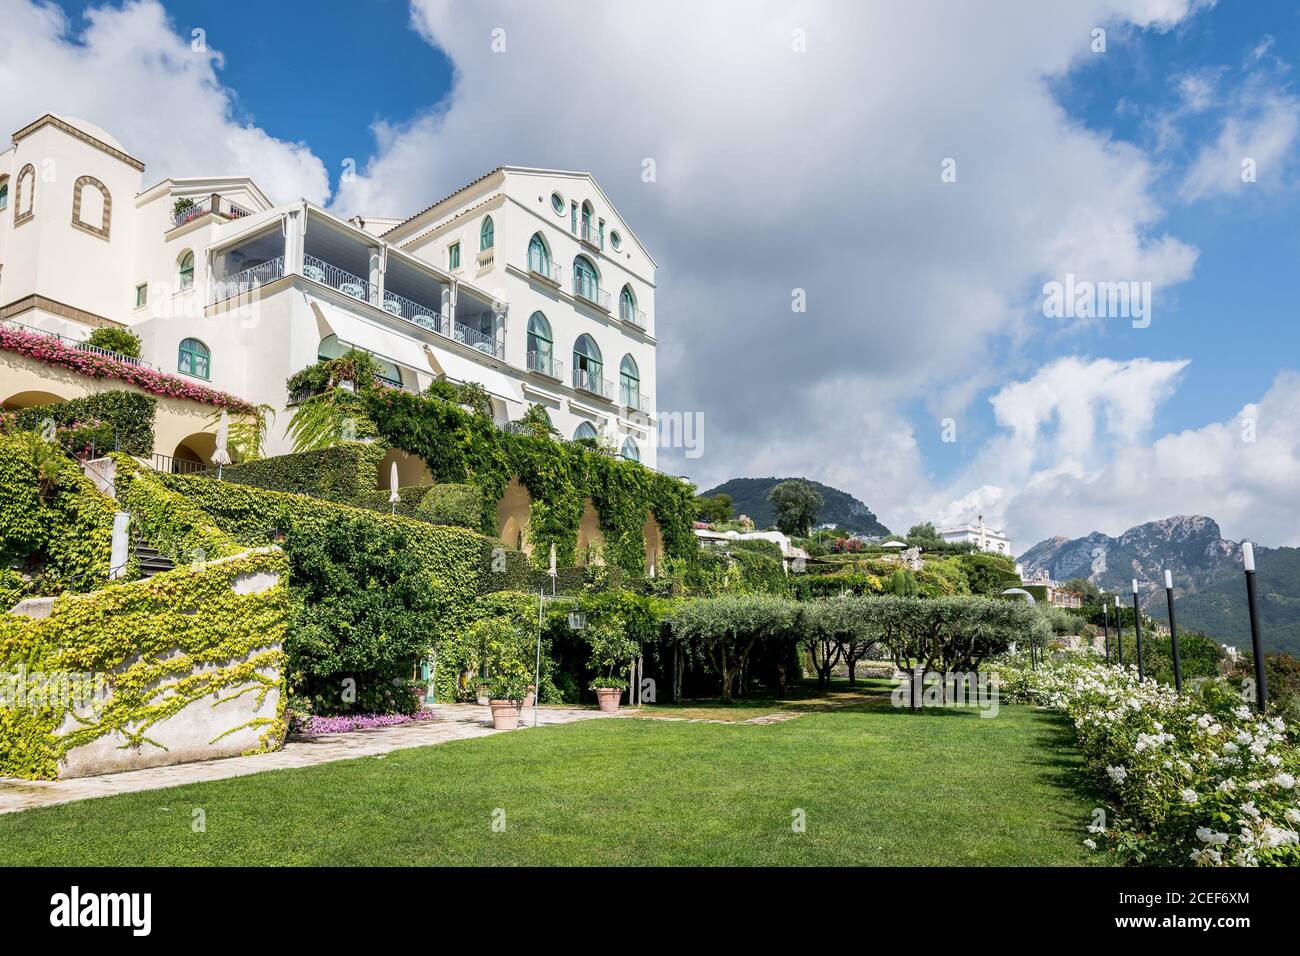 Caruso, a Belmond Hotel, Amalfi Coast